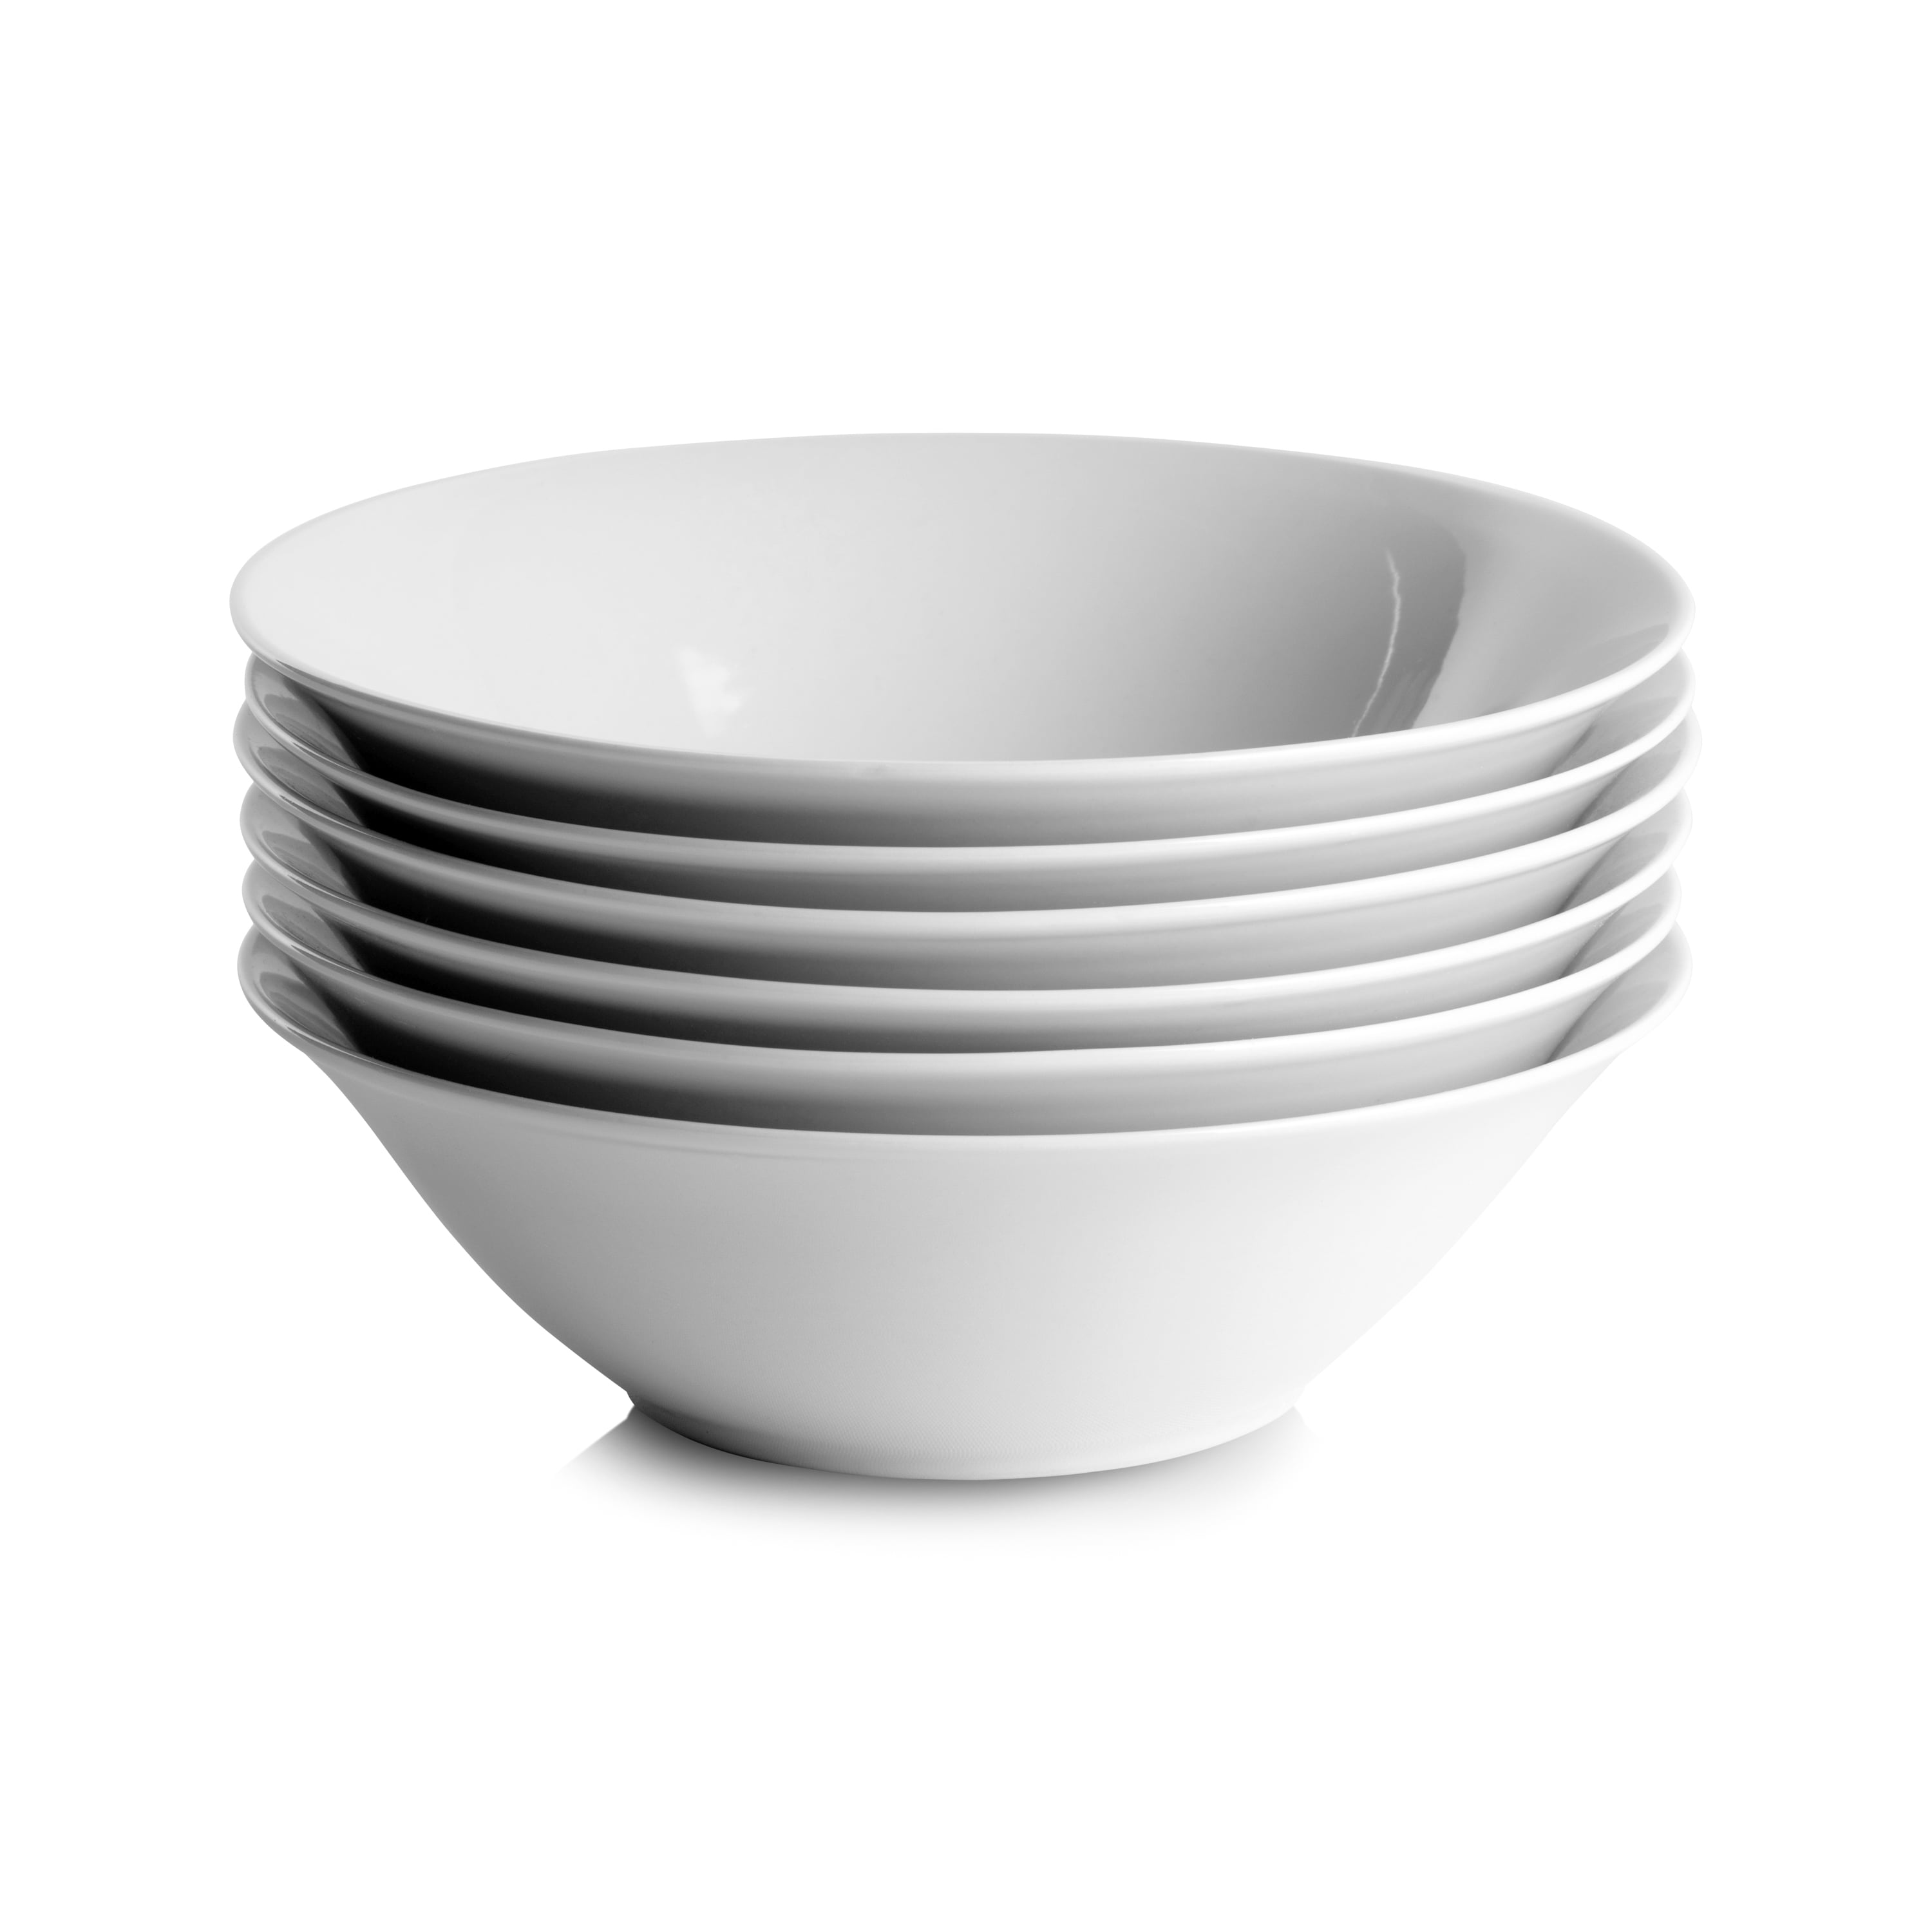 TGLBT 26-Ounce Porcelain Bowl Set for Soup/Cereal White 6 Packs 